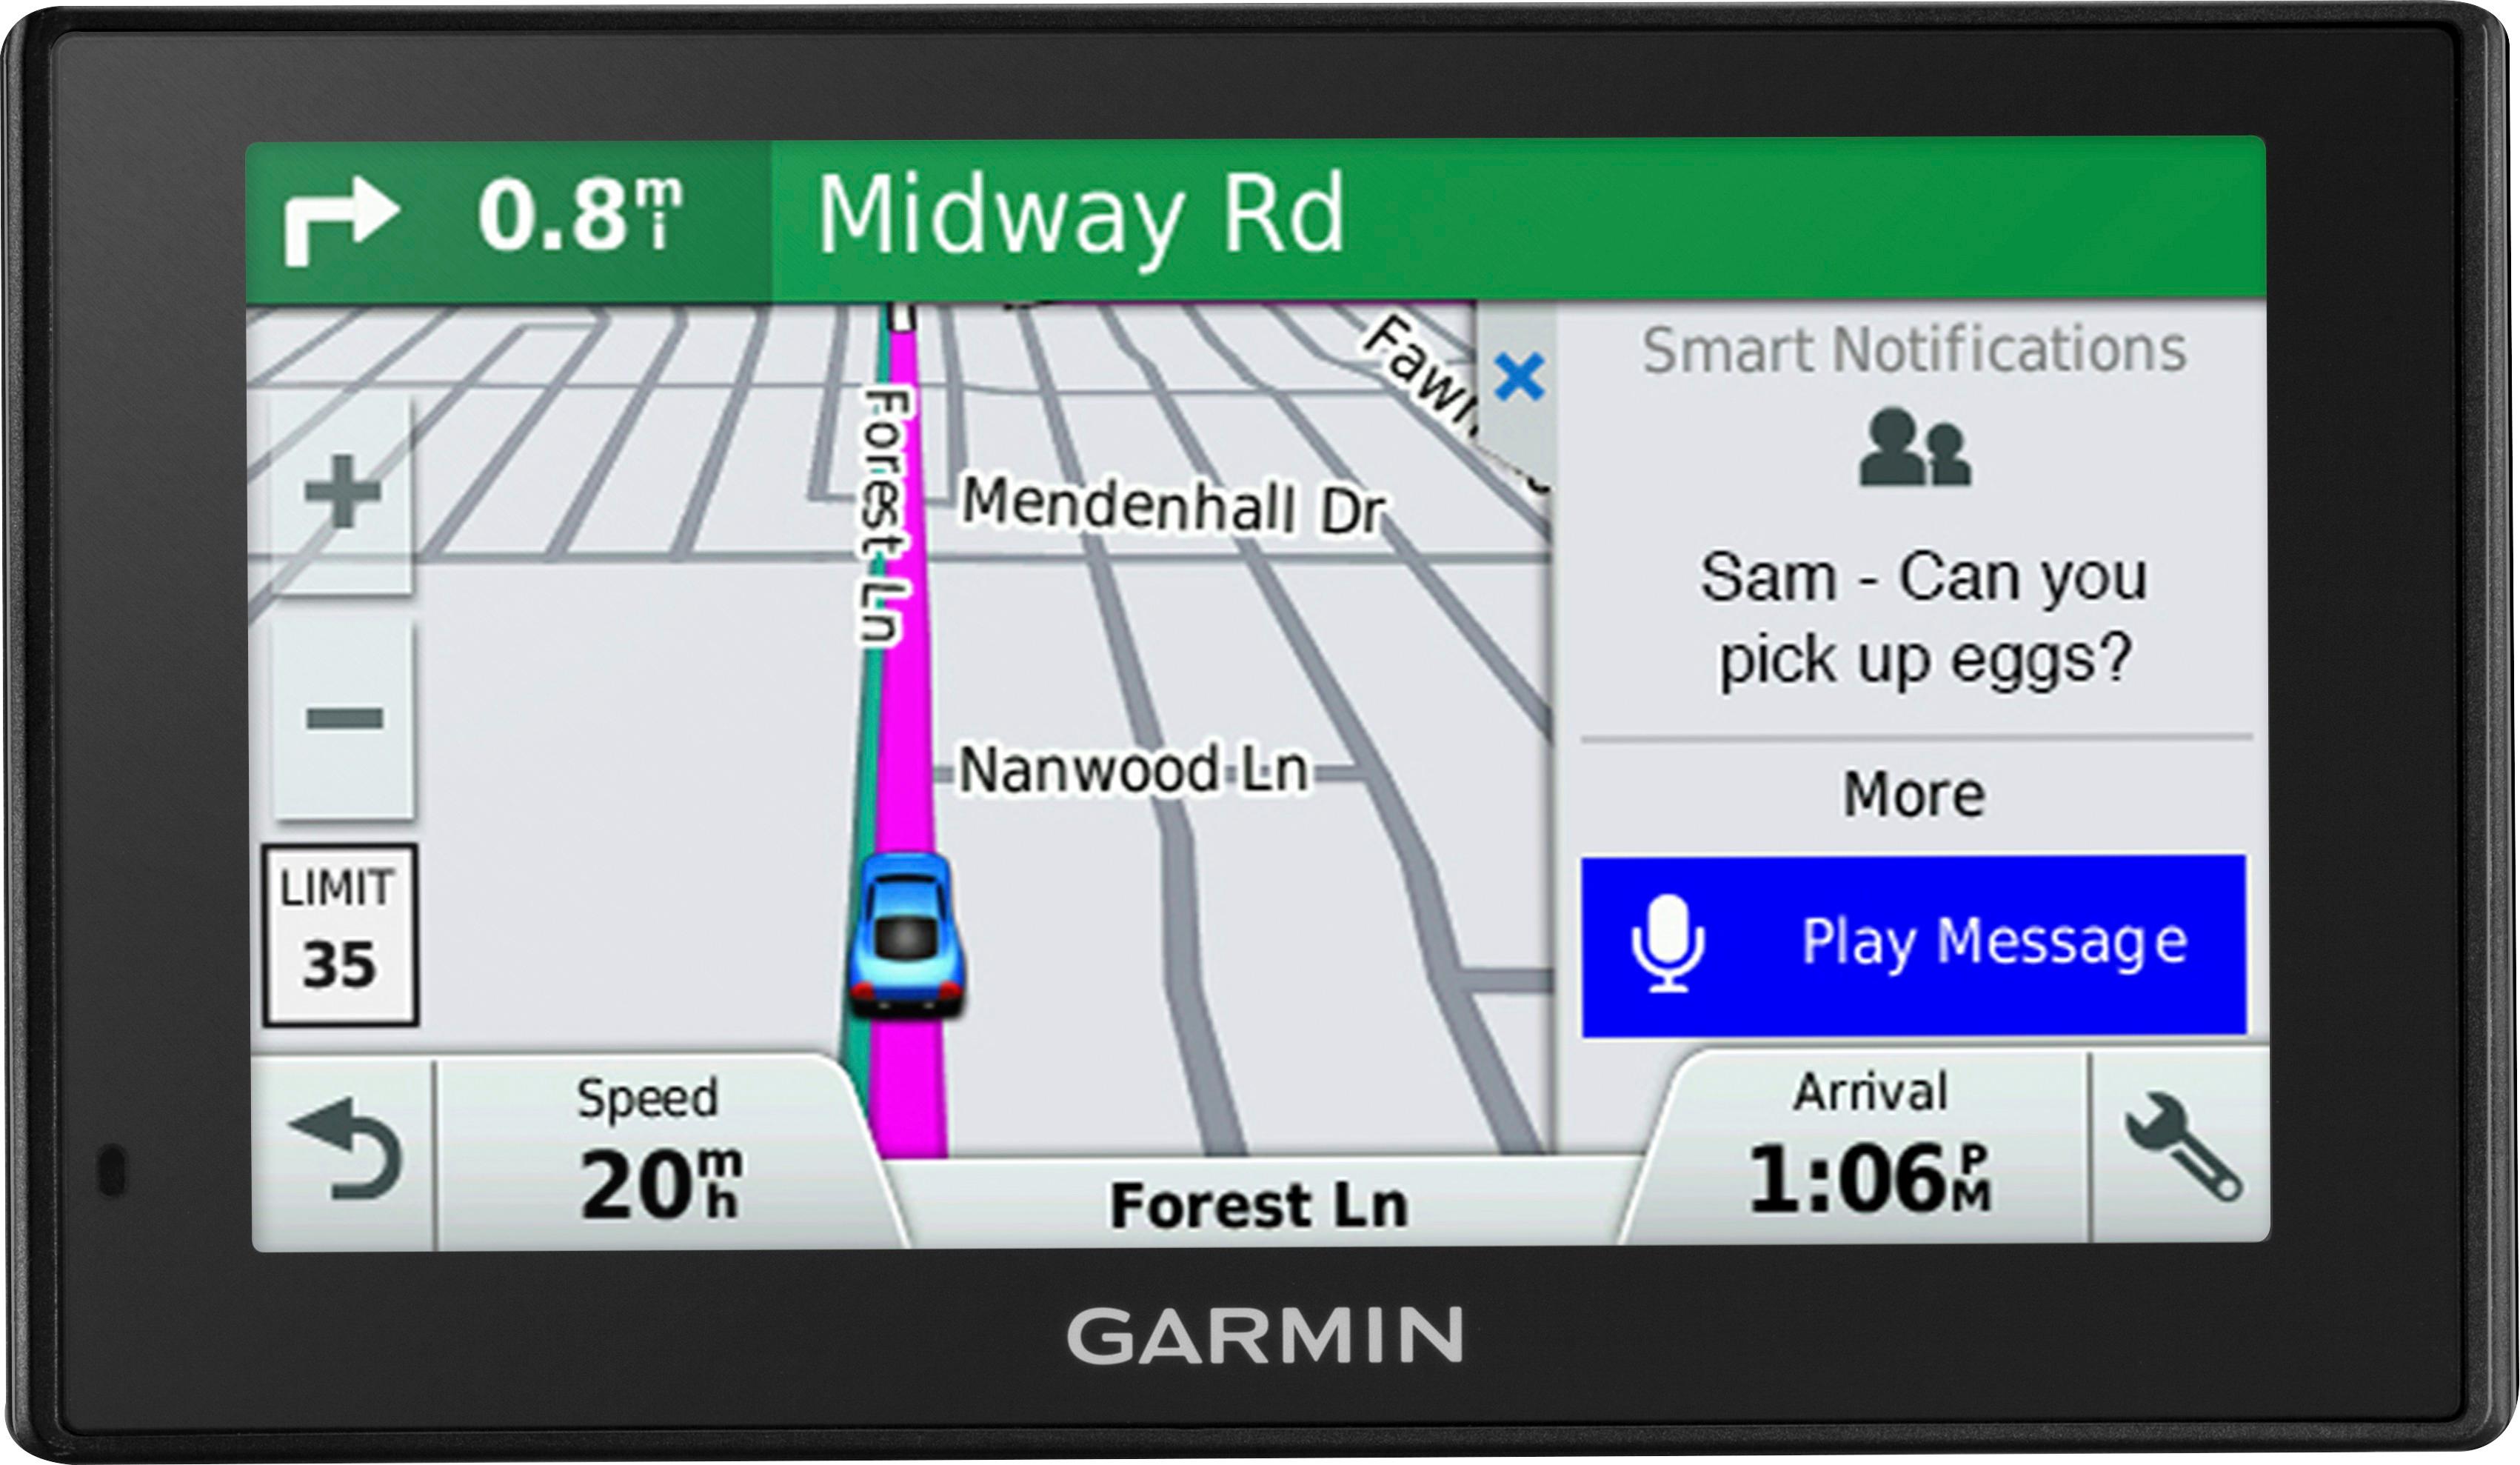 Garmin gps update cost, How to update garmin gps maps ,Garmin gps update software ,Garmin update software